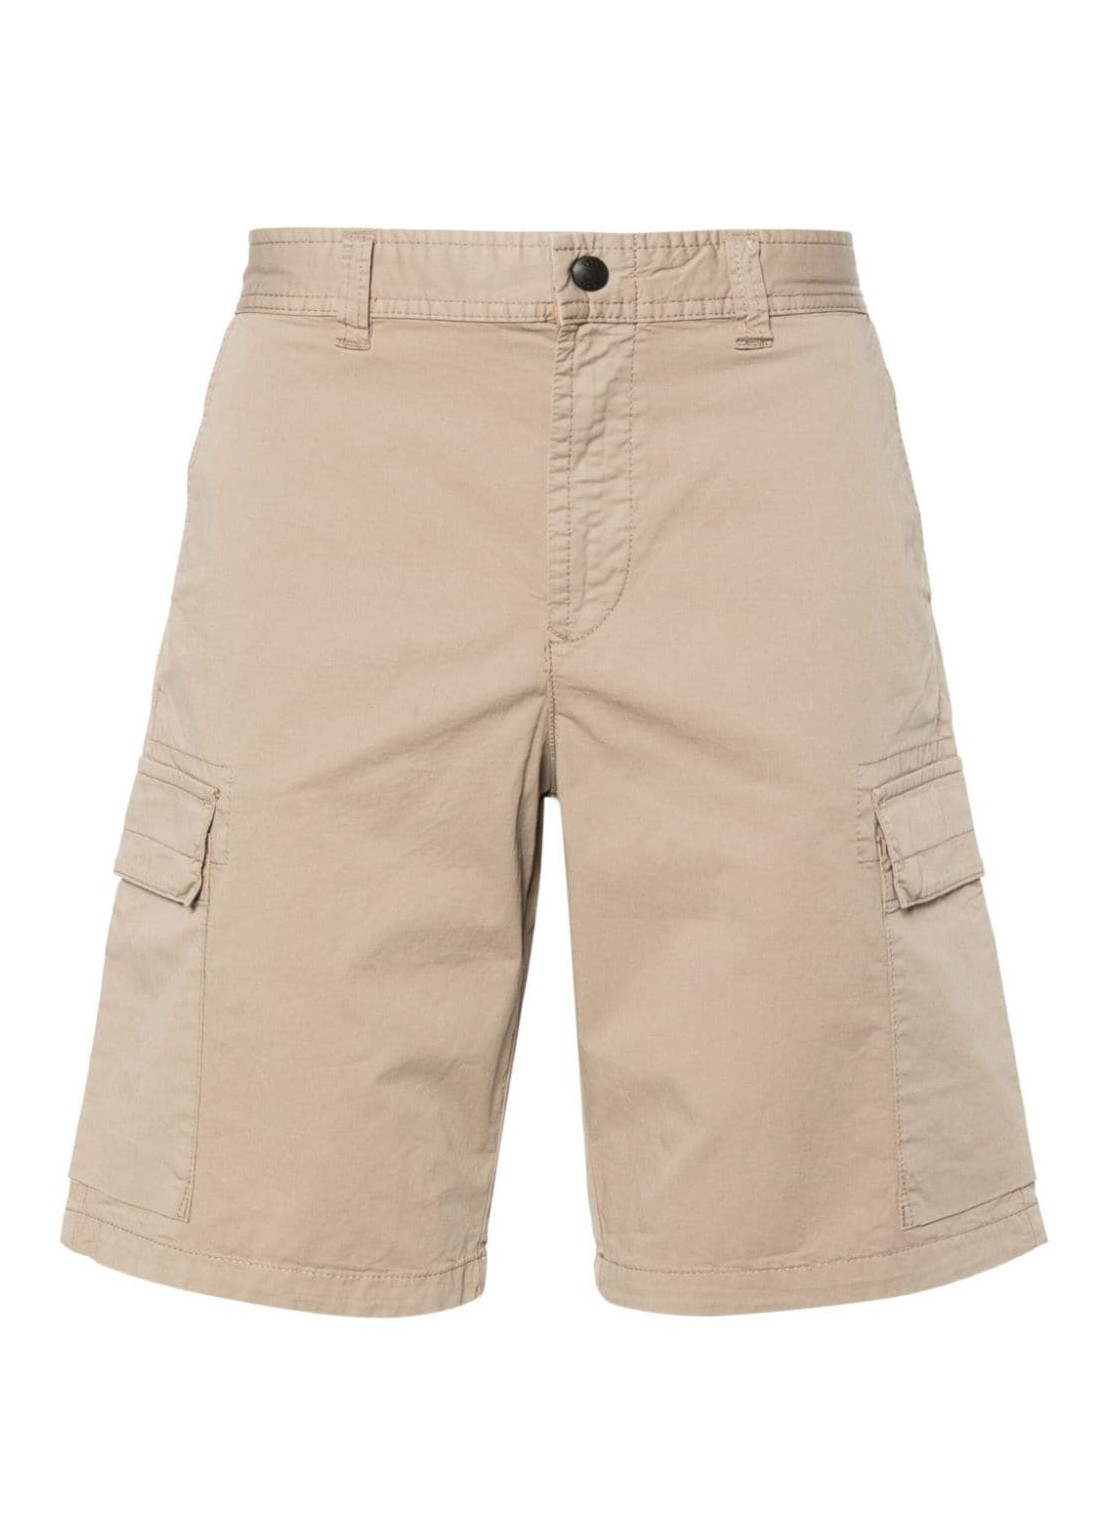 Pantalon corto boss short pant mansisla-6-cargo-shorts - 50510866 246 talla 52
 